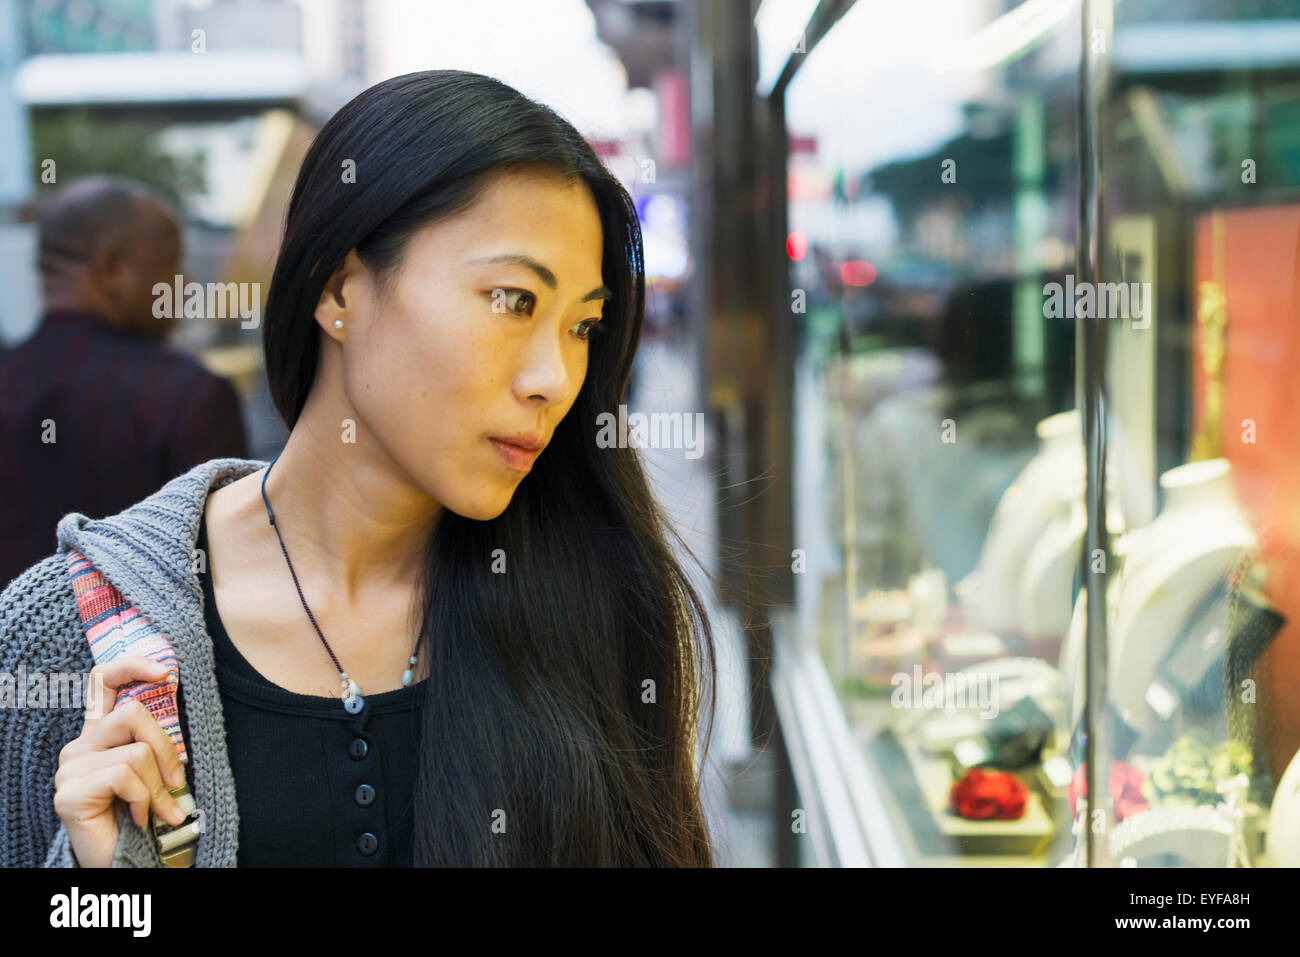 A young woman window shopping at the retail shops along the street, Kowloon; Hong Kong, China Stock Photo